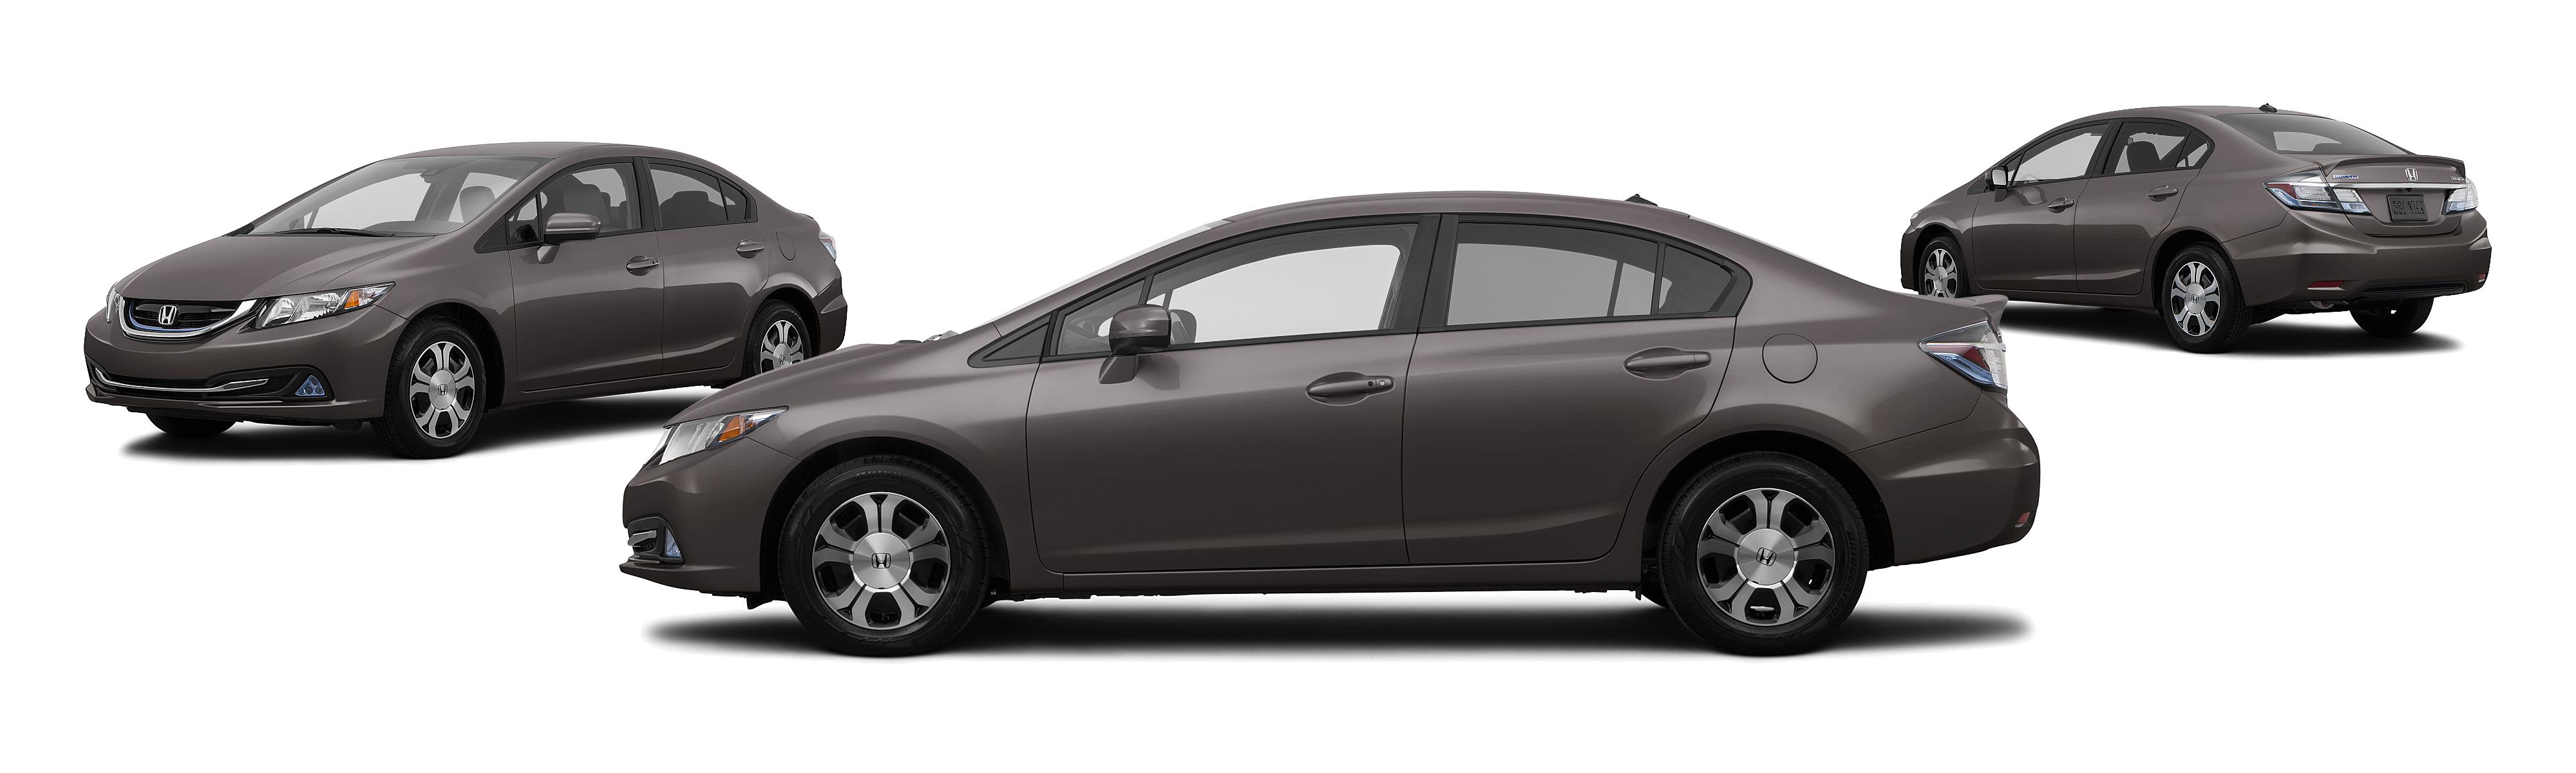 2014 Honda Civic Hybrid 4dr Sedan w/Leather - Research - GrooveCar